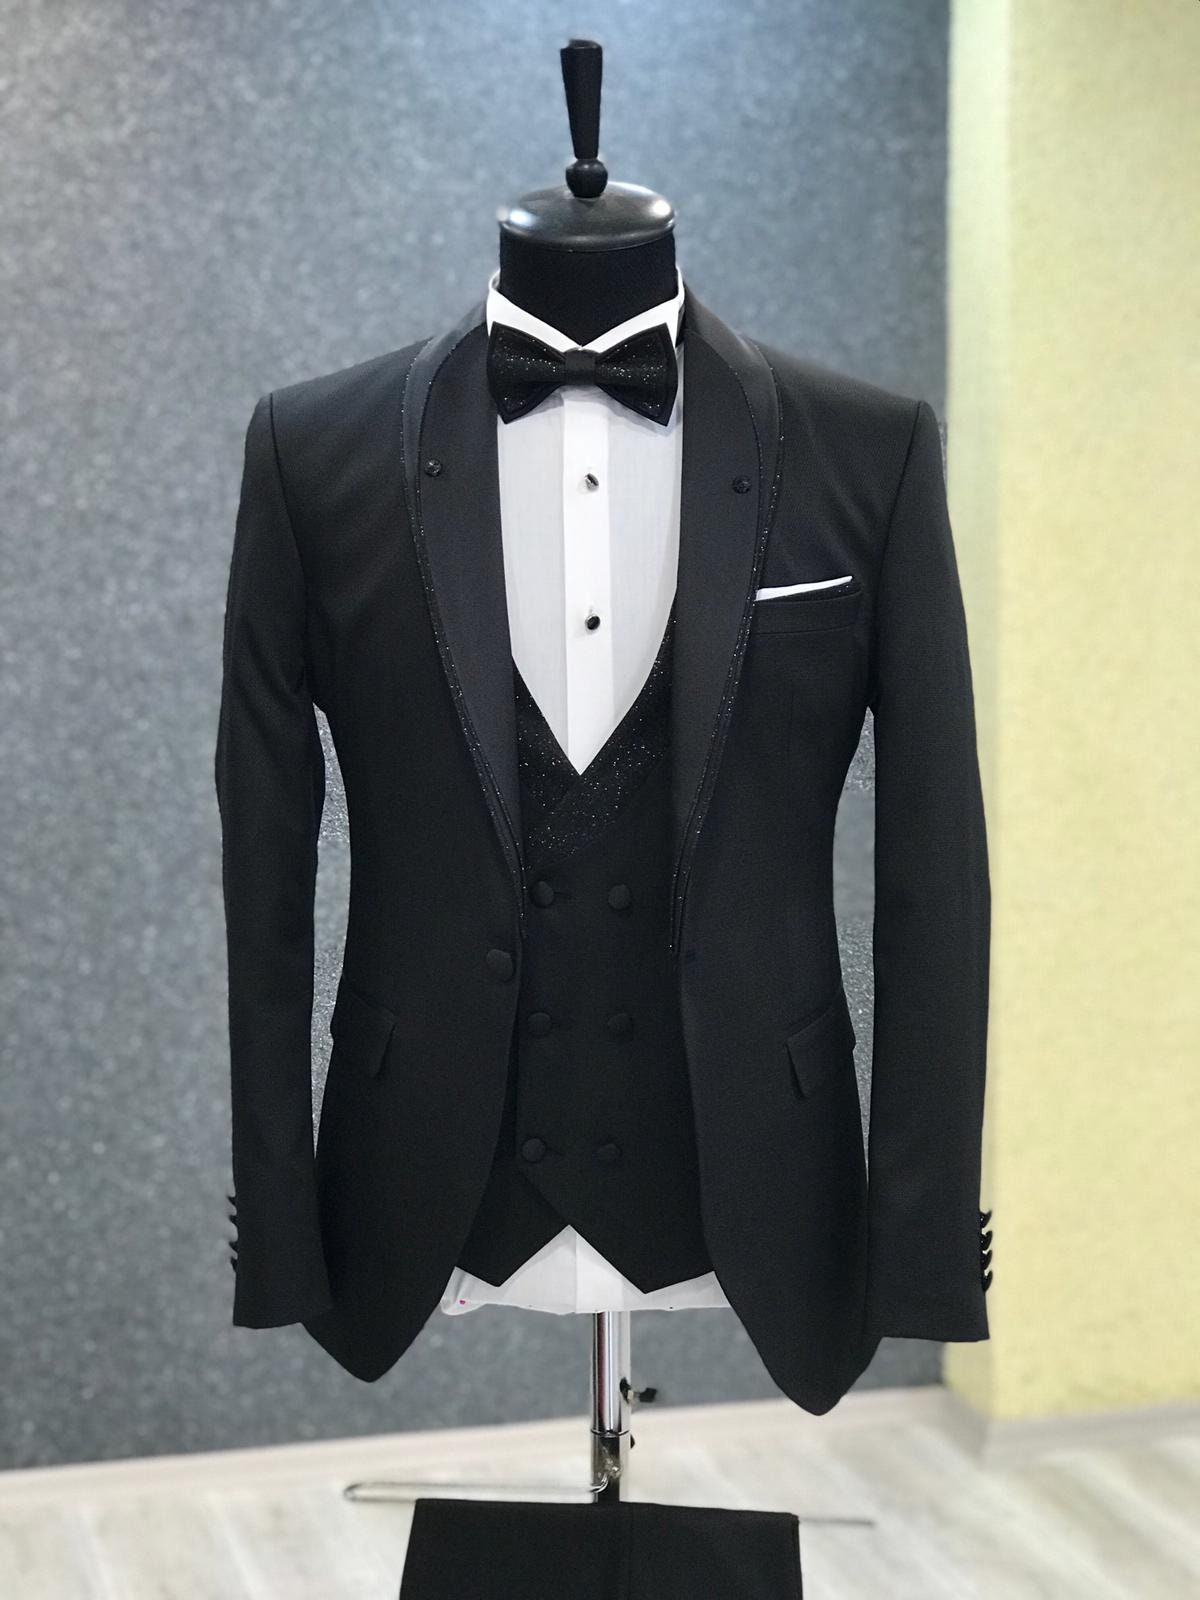 Men Suits Black Wedding Suit Tuxedo Three Piece One Button | Etsy